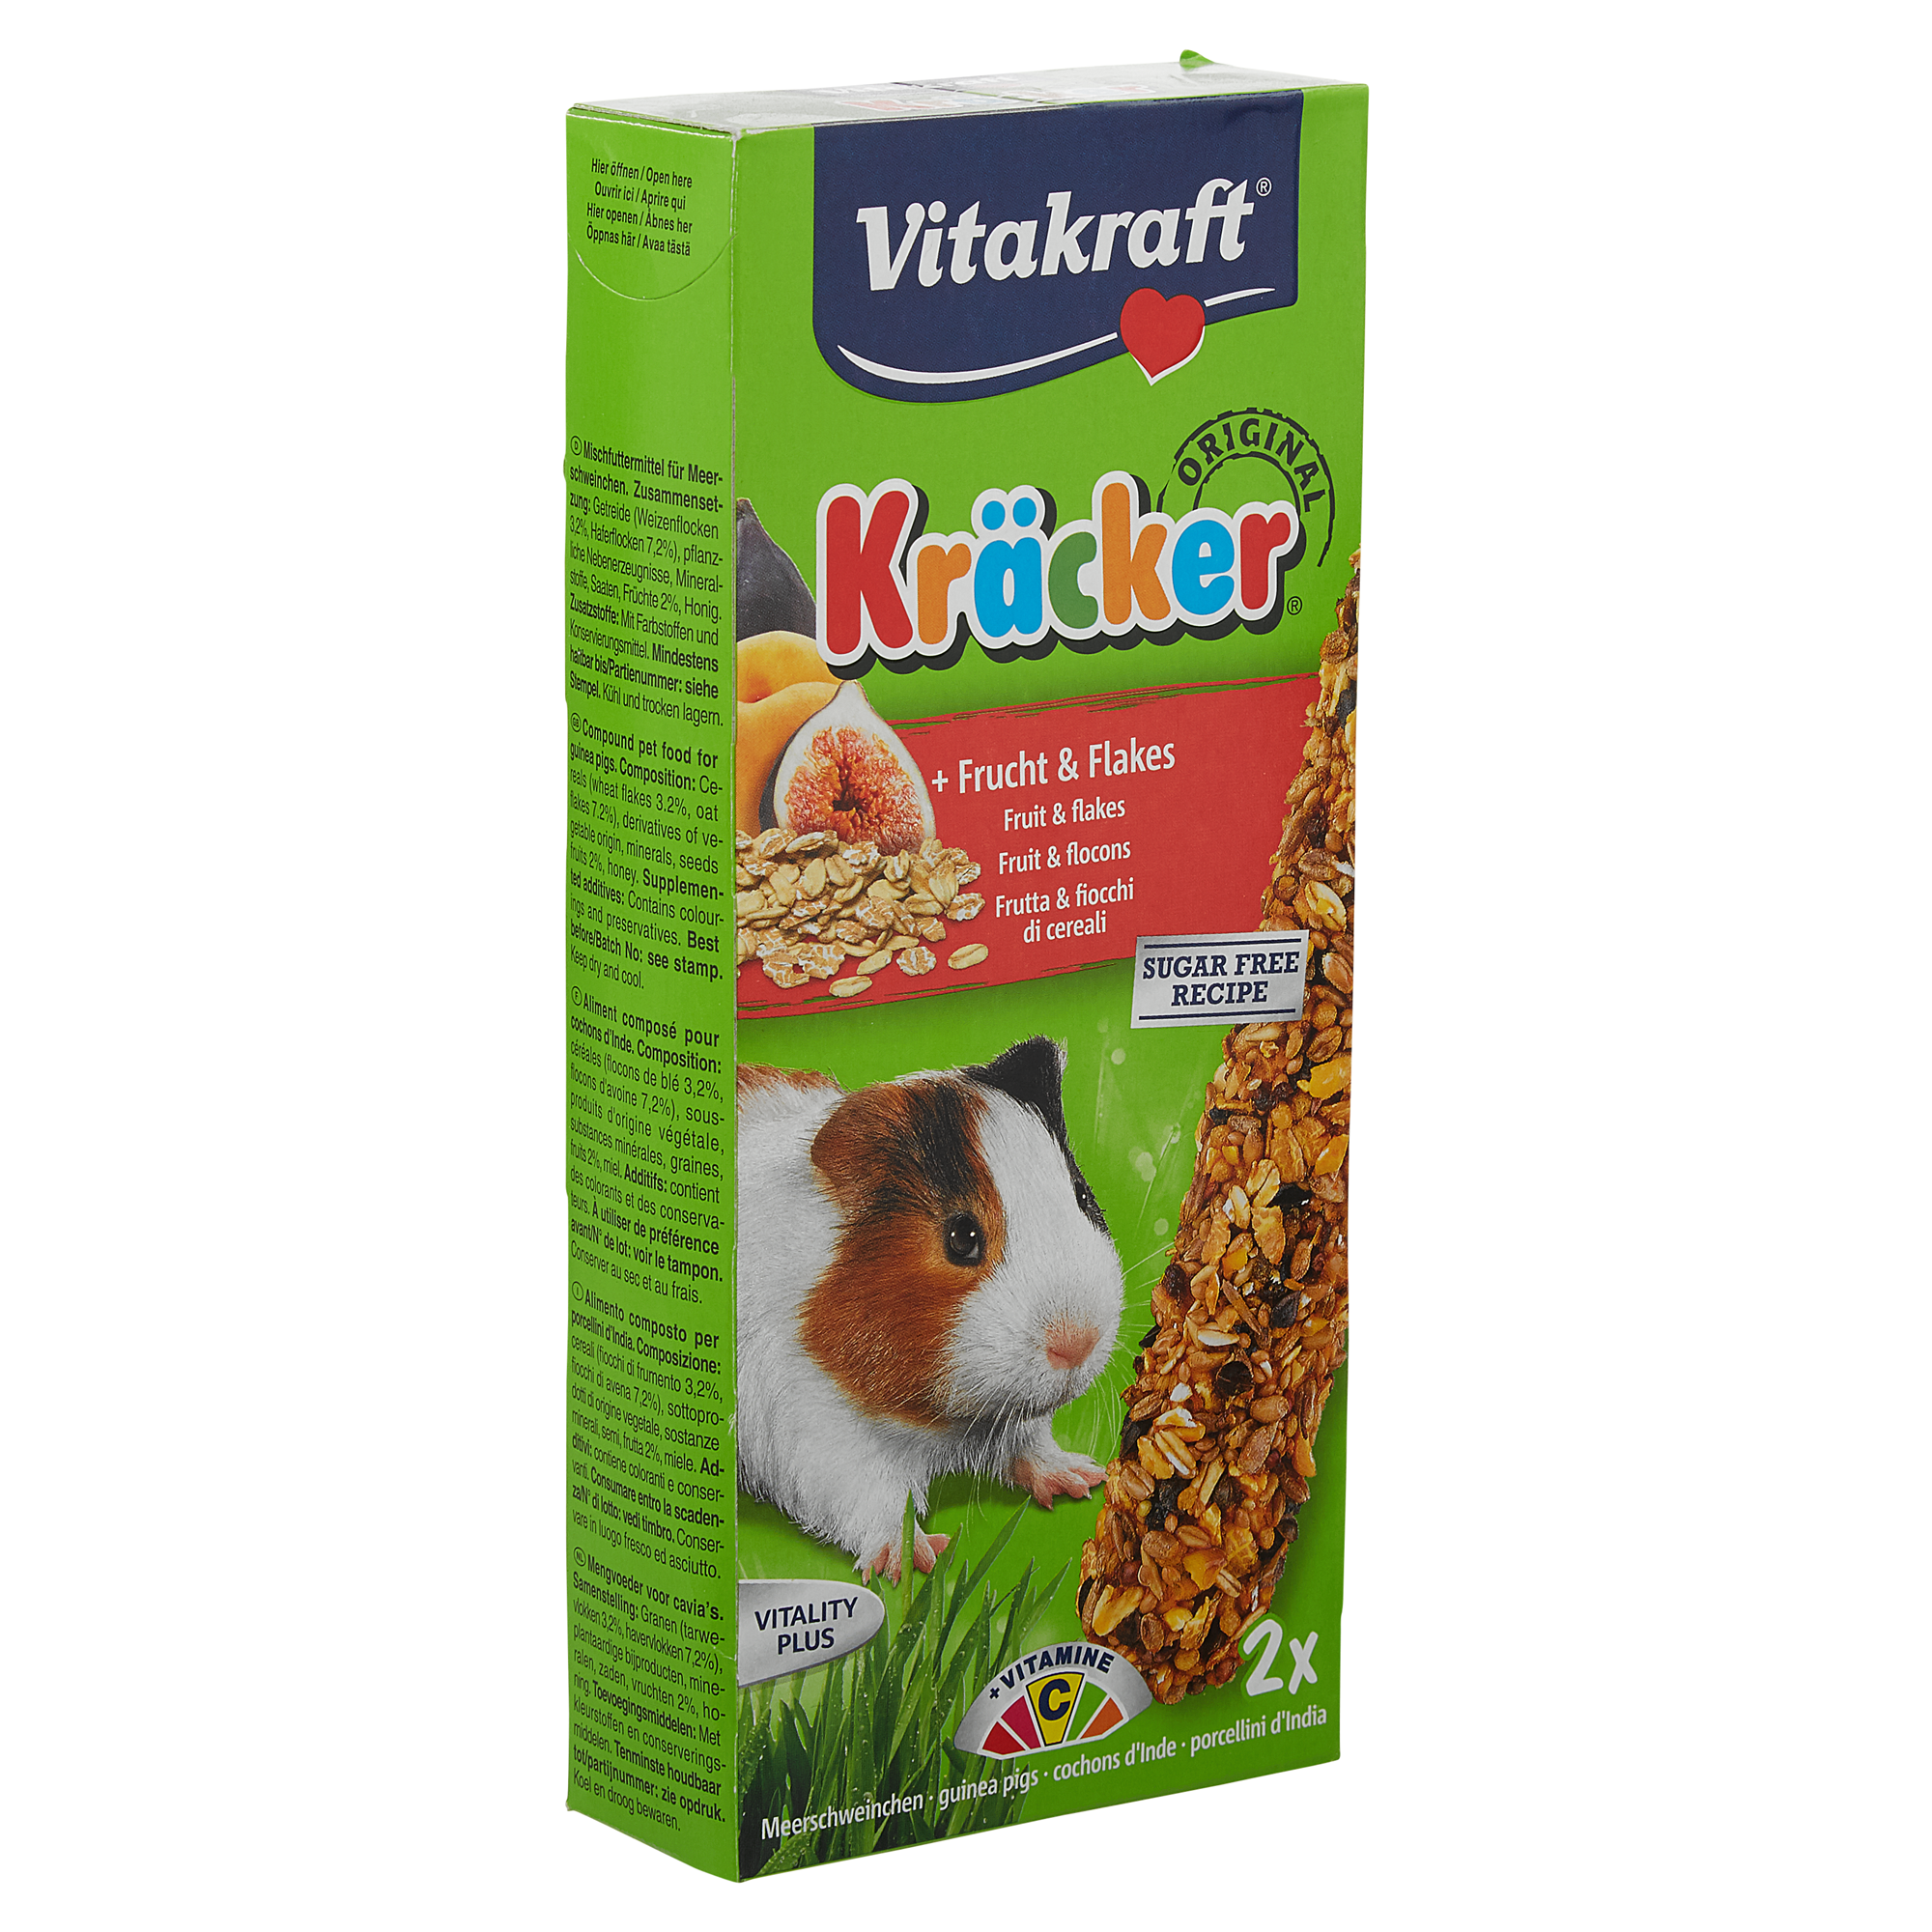 Meerschweinchenfutter Kräcker® Original Frucht/Flakes 2 Stück + product picture